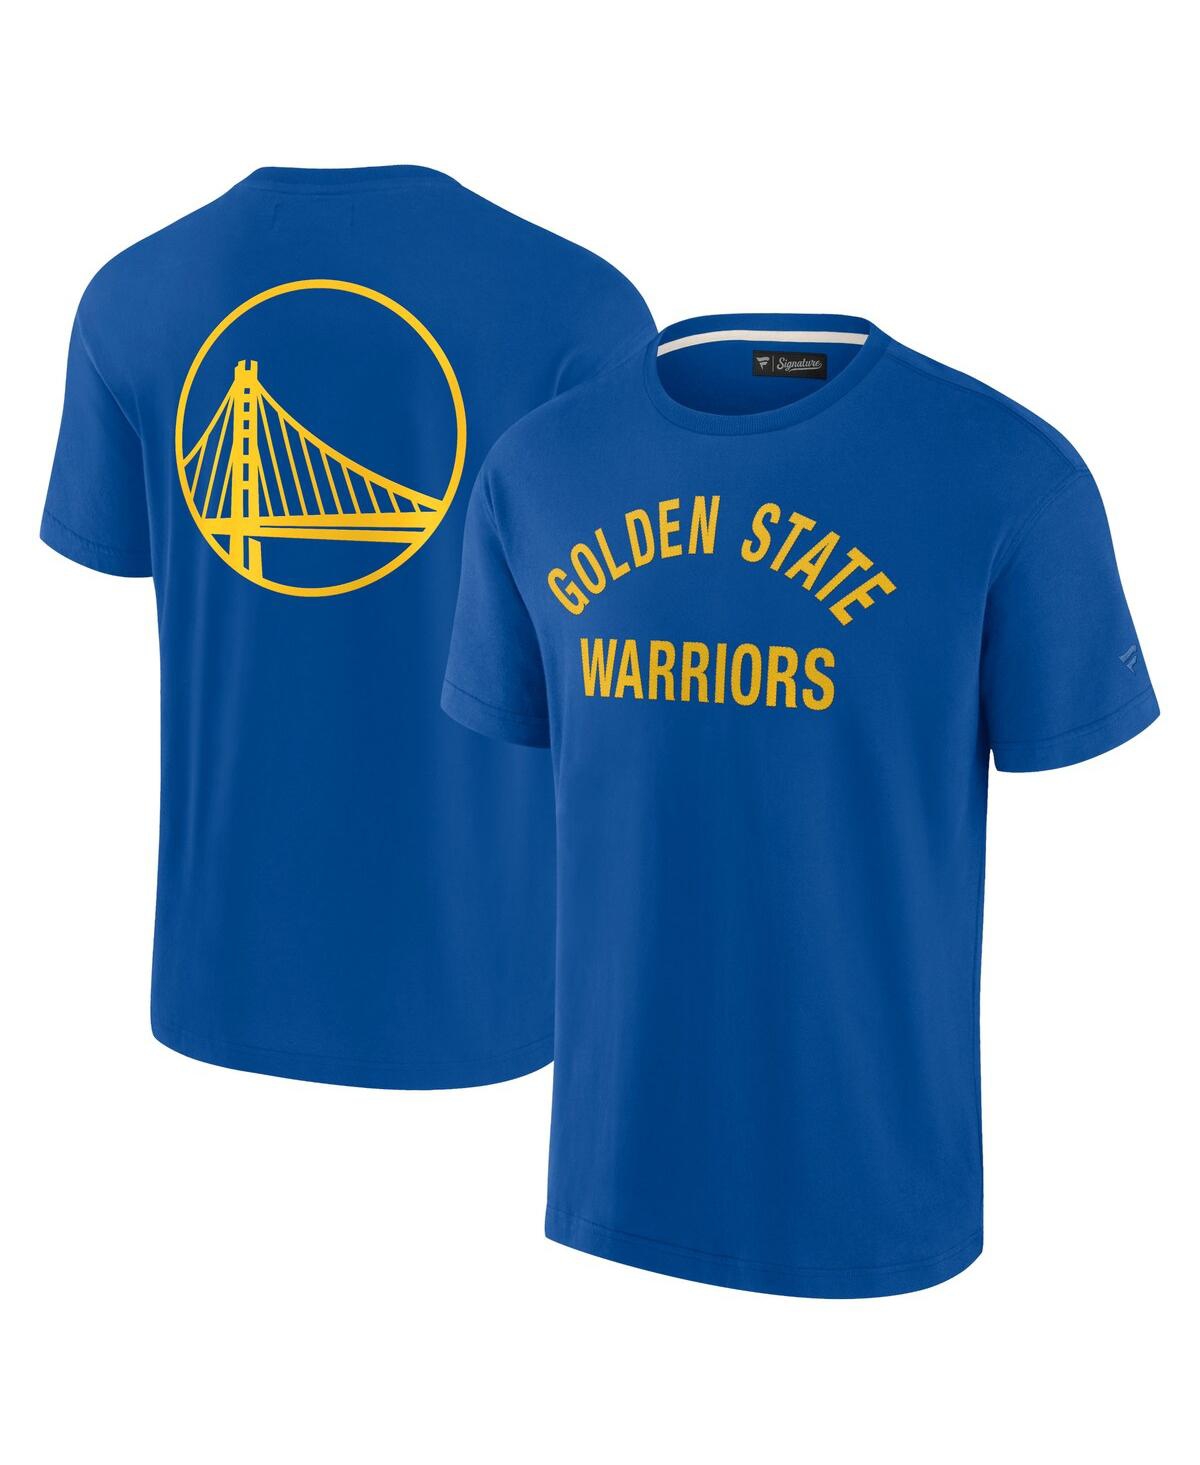 Men's and Women's Royal Golden State Warriors Elements Super Soft Short Sleeve T-Shirt - Royal